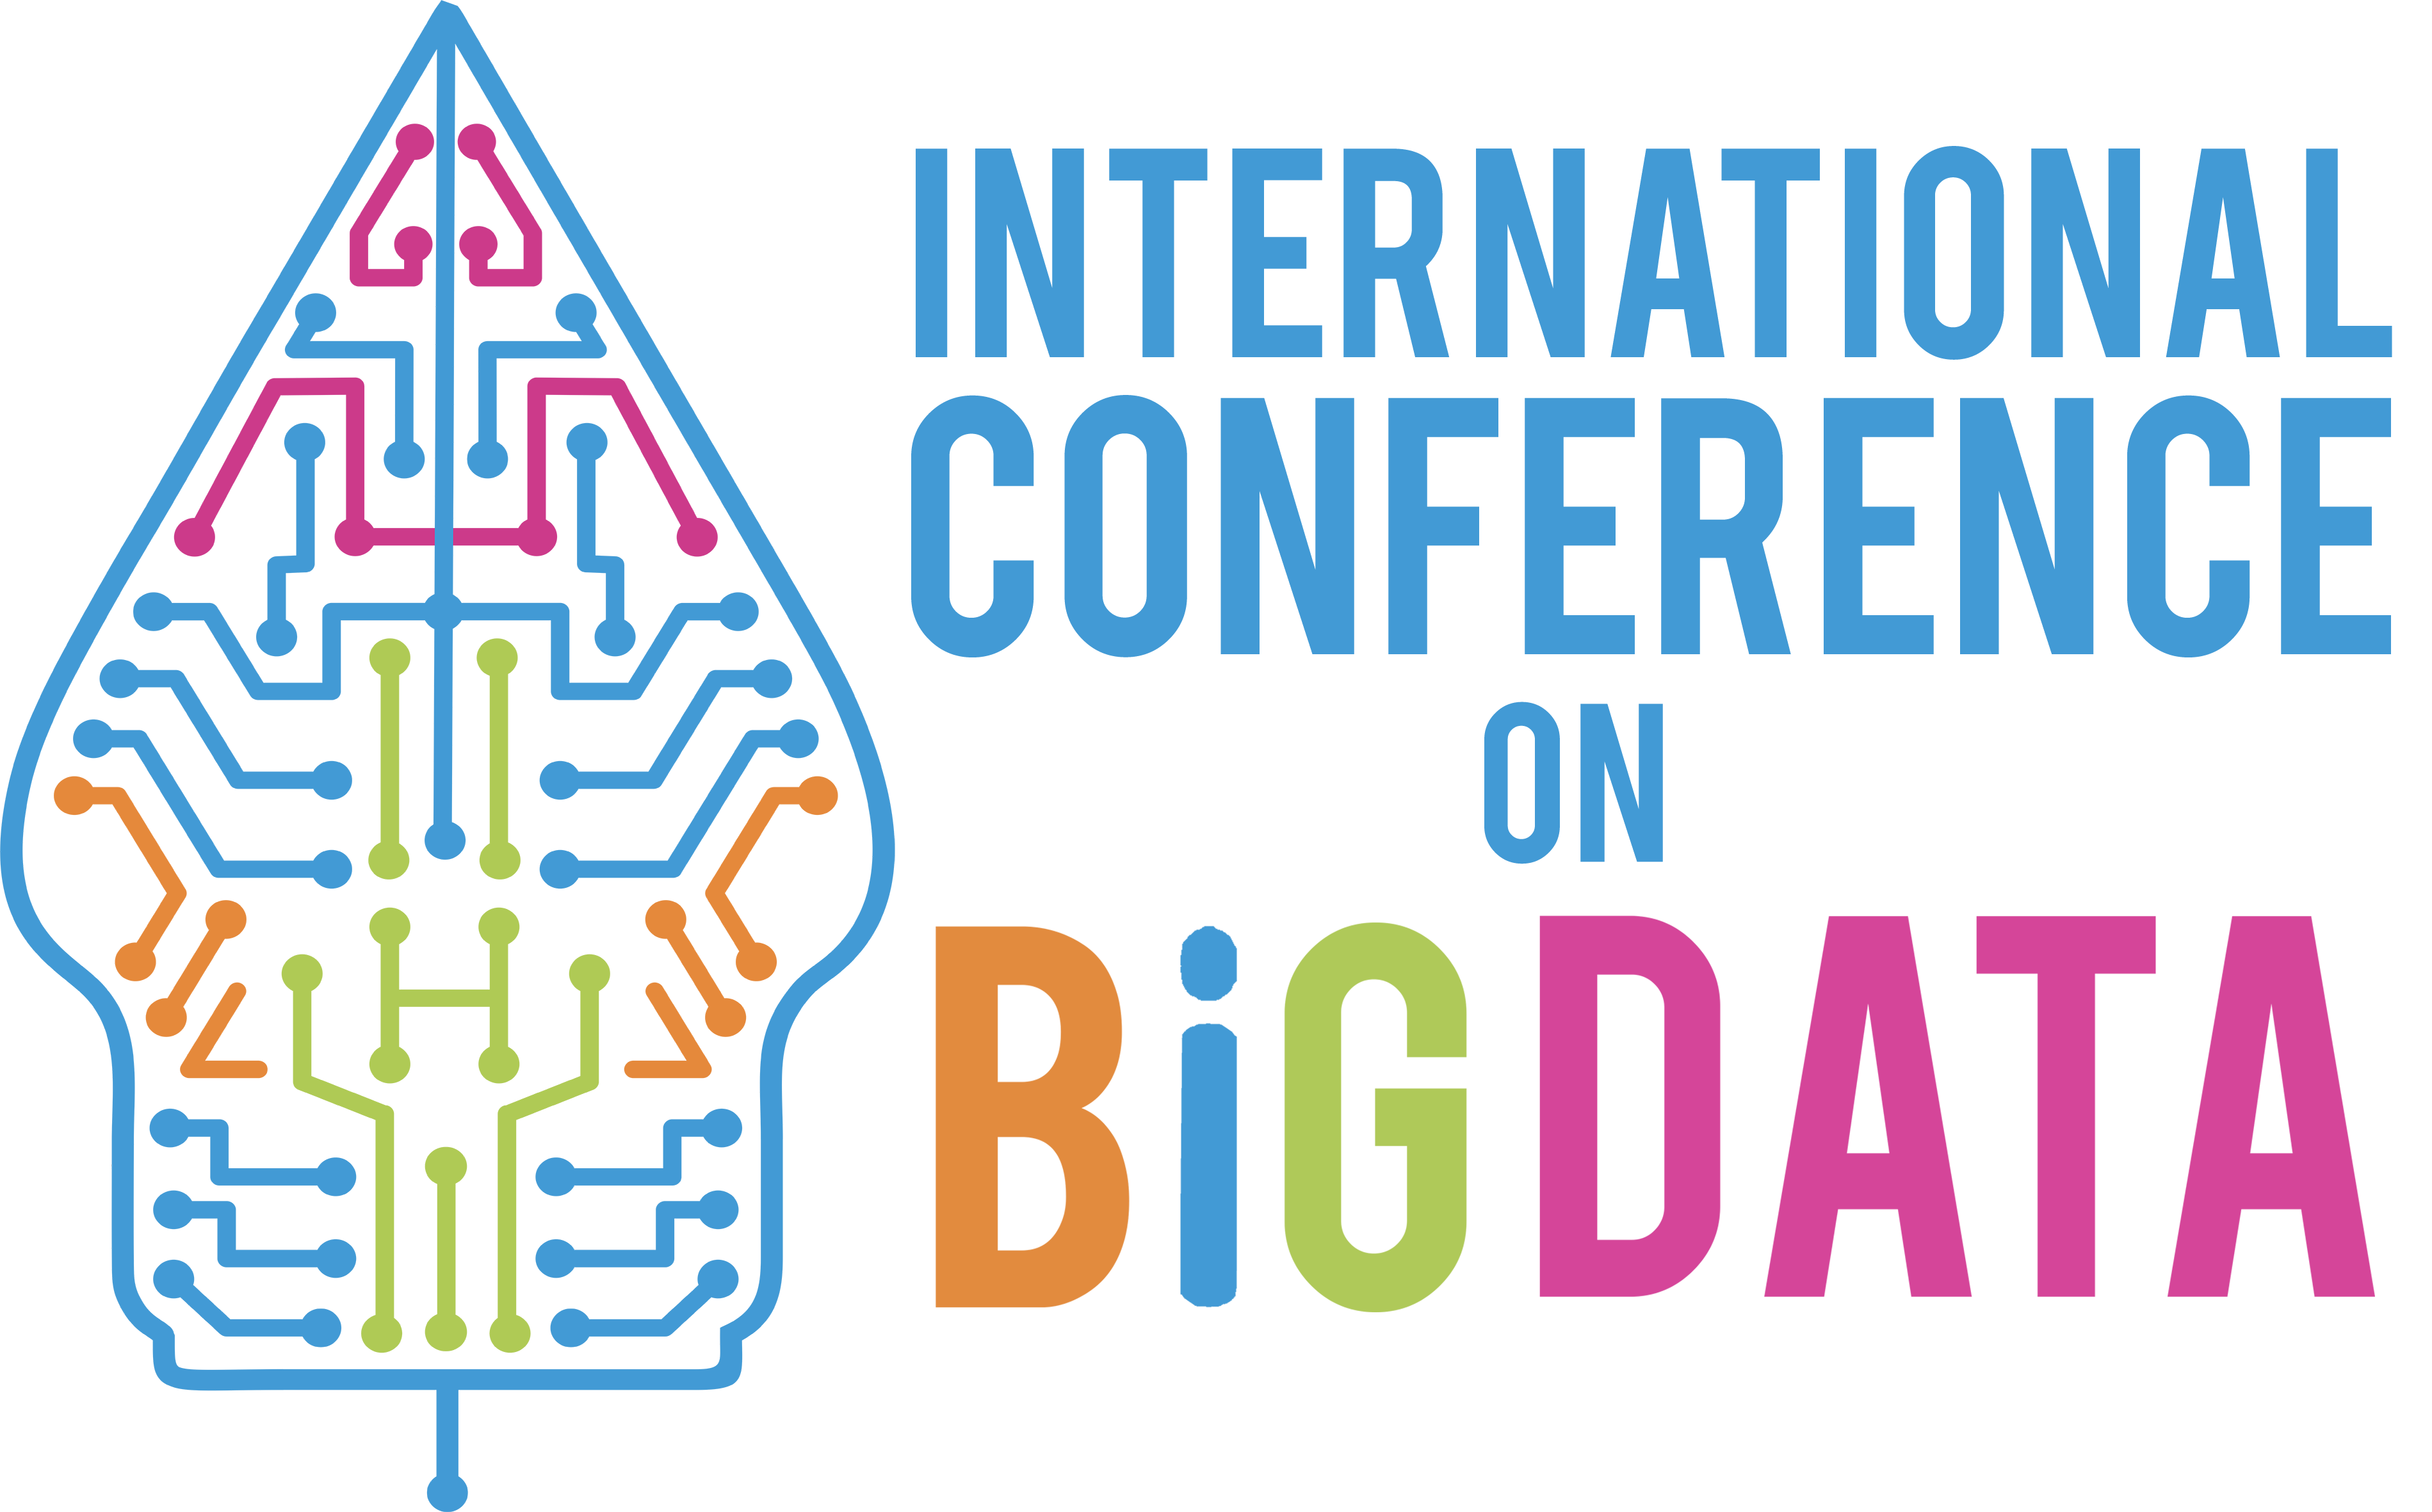 7th International Conference on Big Data